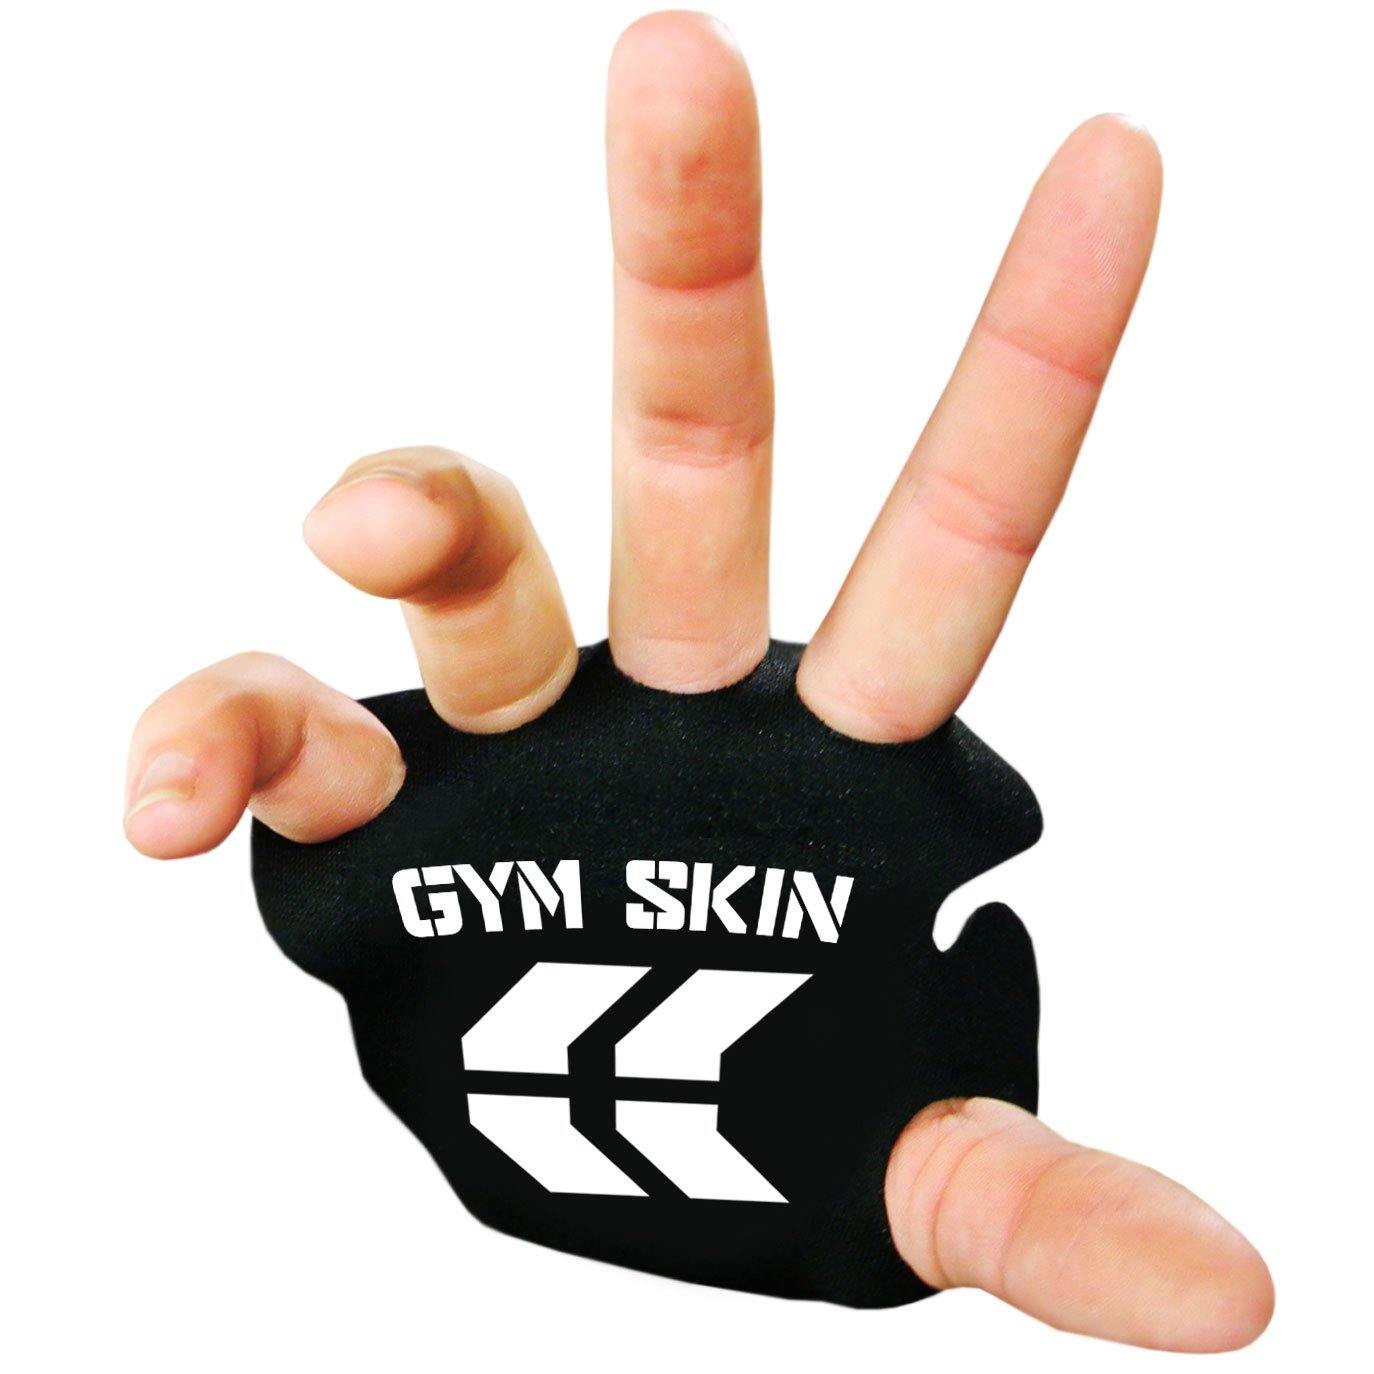 Gym Skin on hand | STKR Concepts